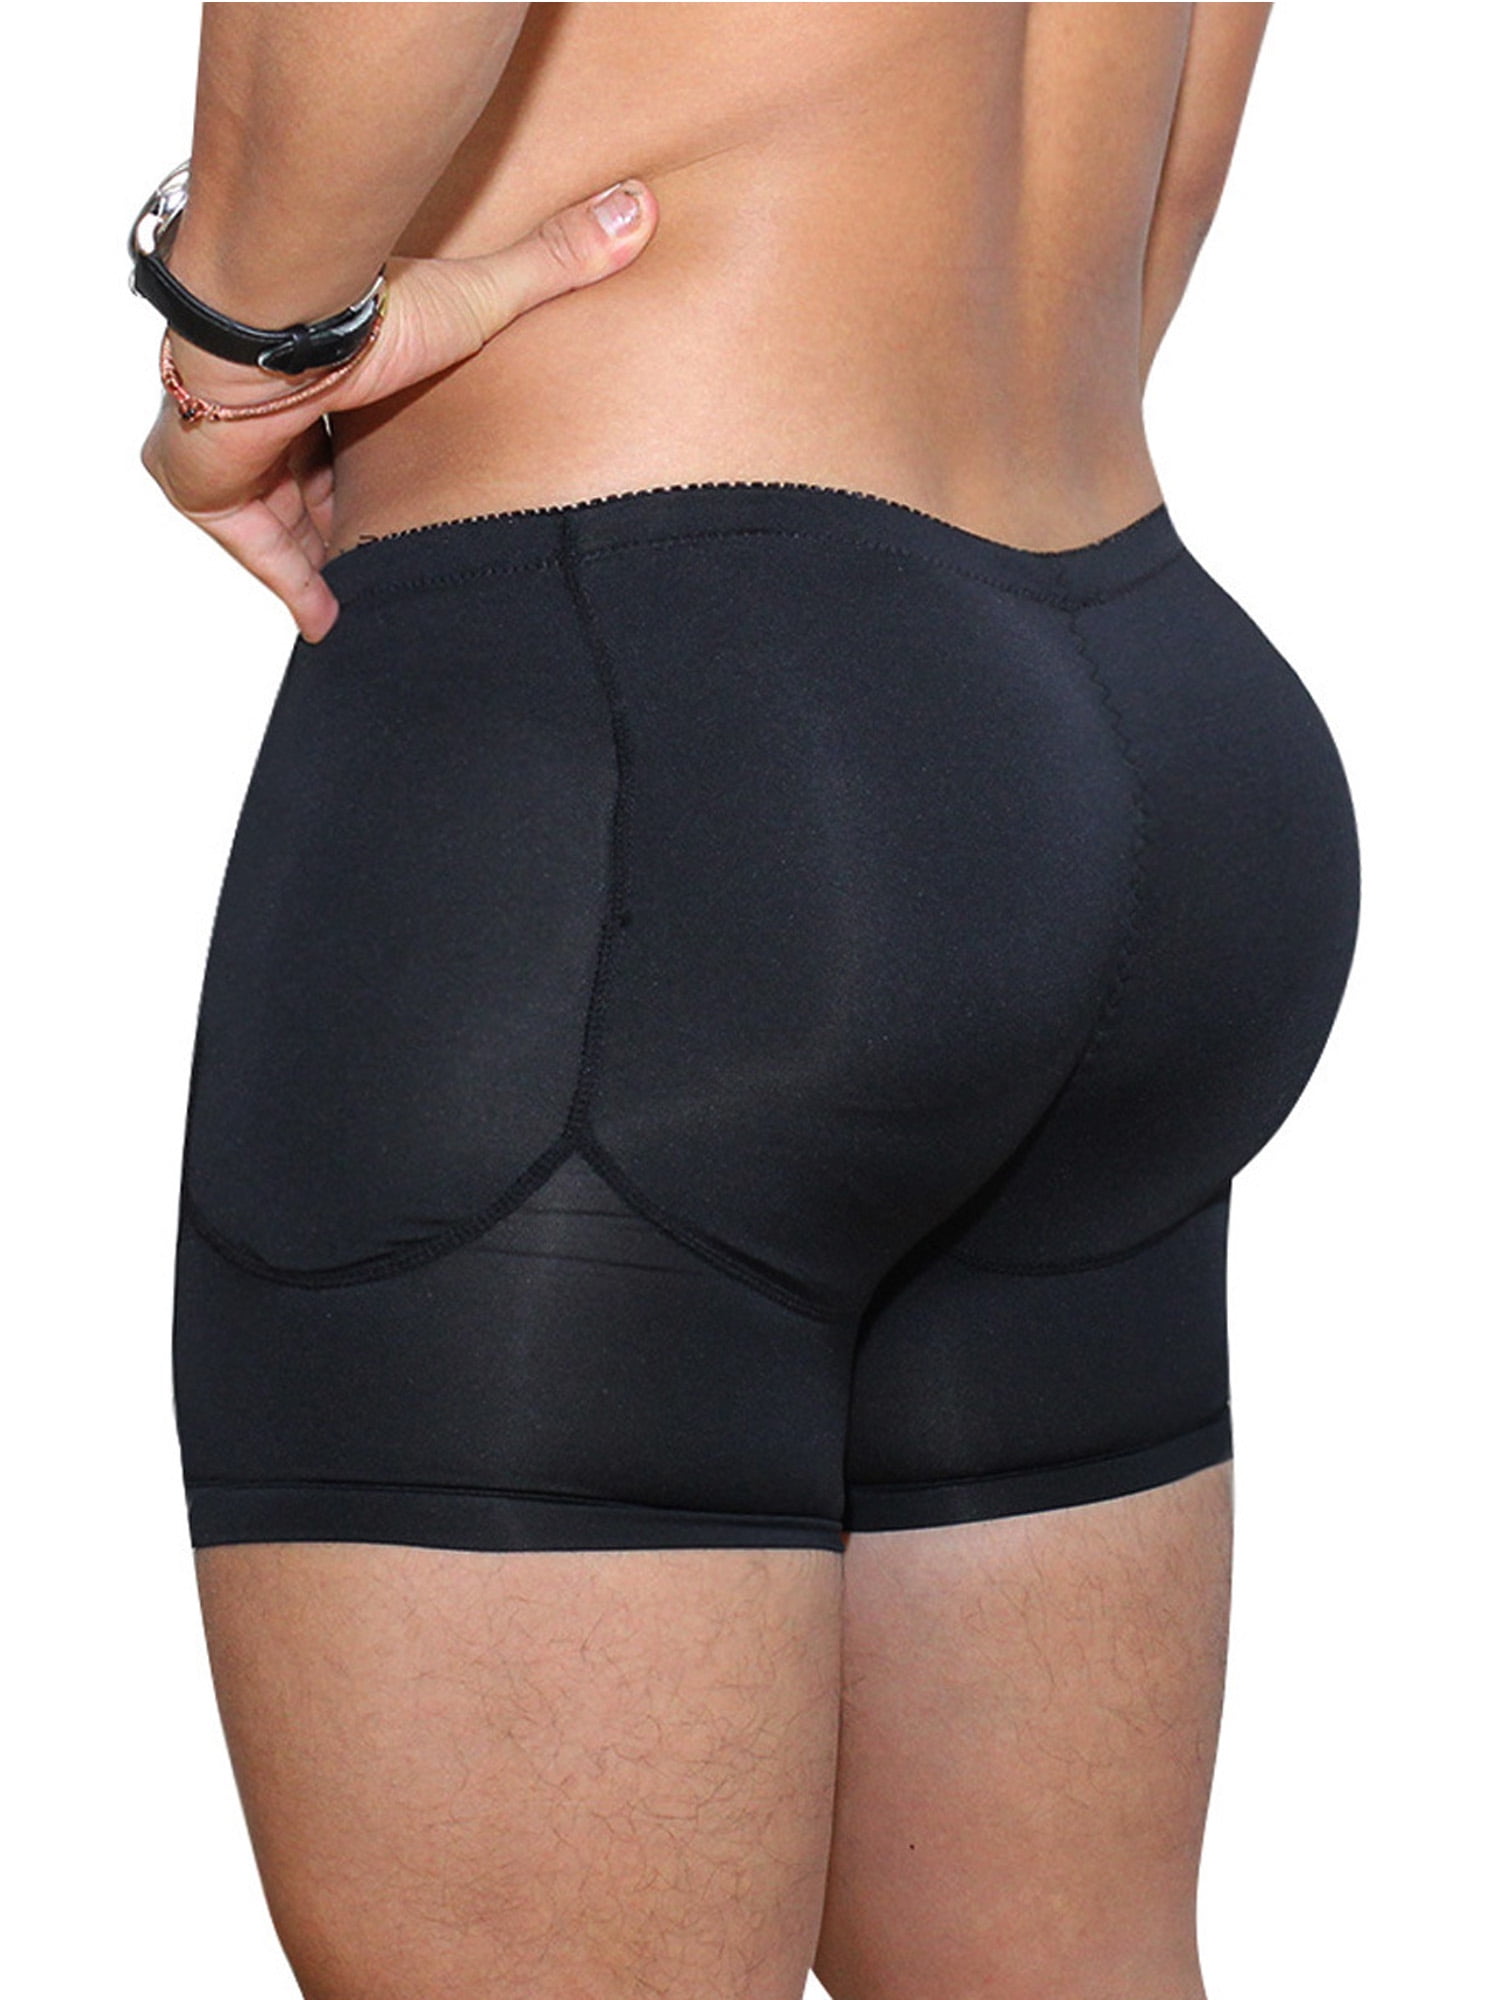 Men's Bum Butt Lifter Padded Boxer Underwear Hip Enhancer Elastic Body  Shaper US